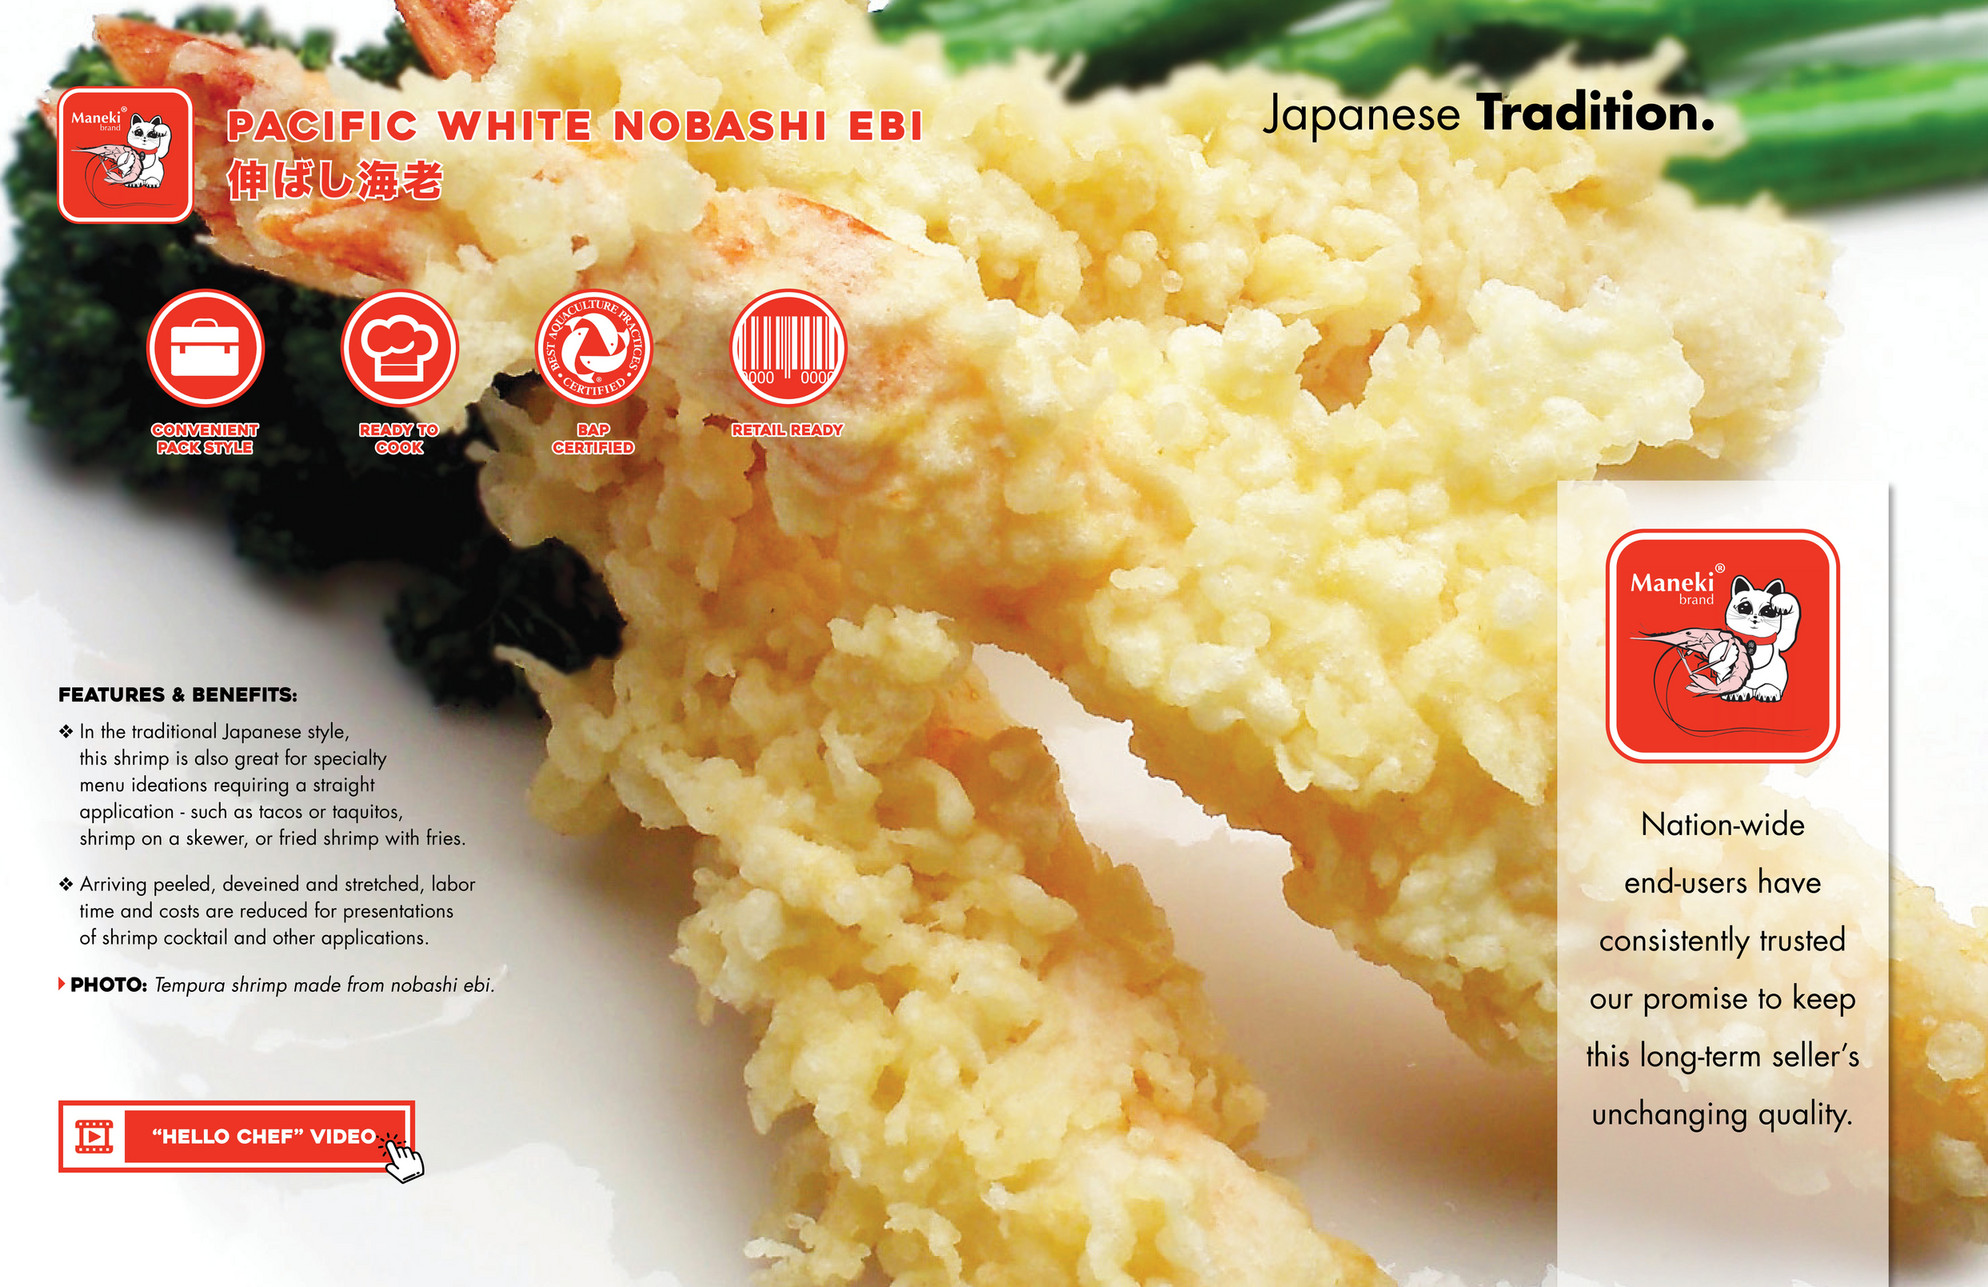 Our Brands - Passport Cuisine®, Maneki®, Maneki® Value, Crane Bay®,  Tezukuri® — DNI Group - Sashimi Grade Seafood & Authentic Japanese  Appetizers